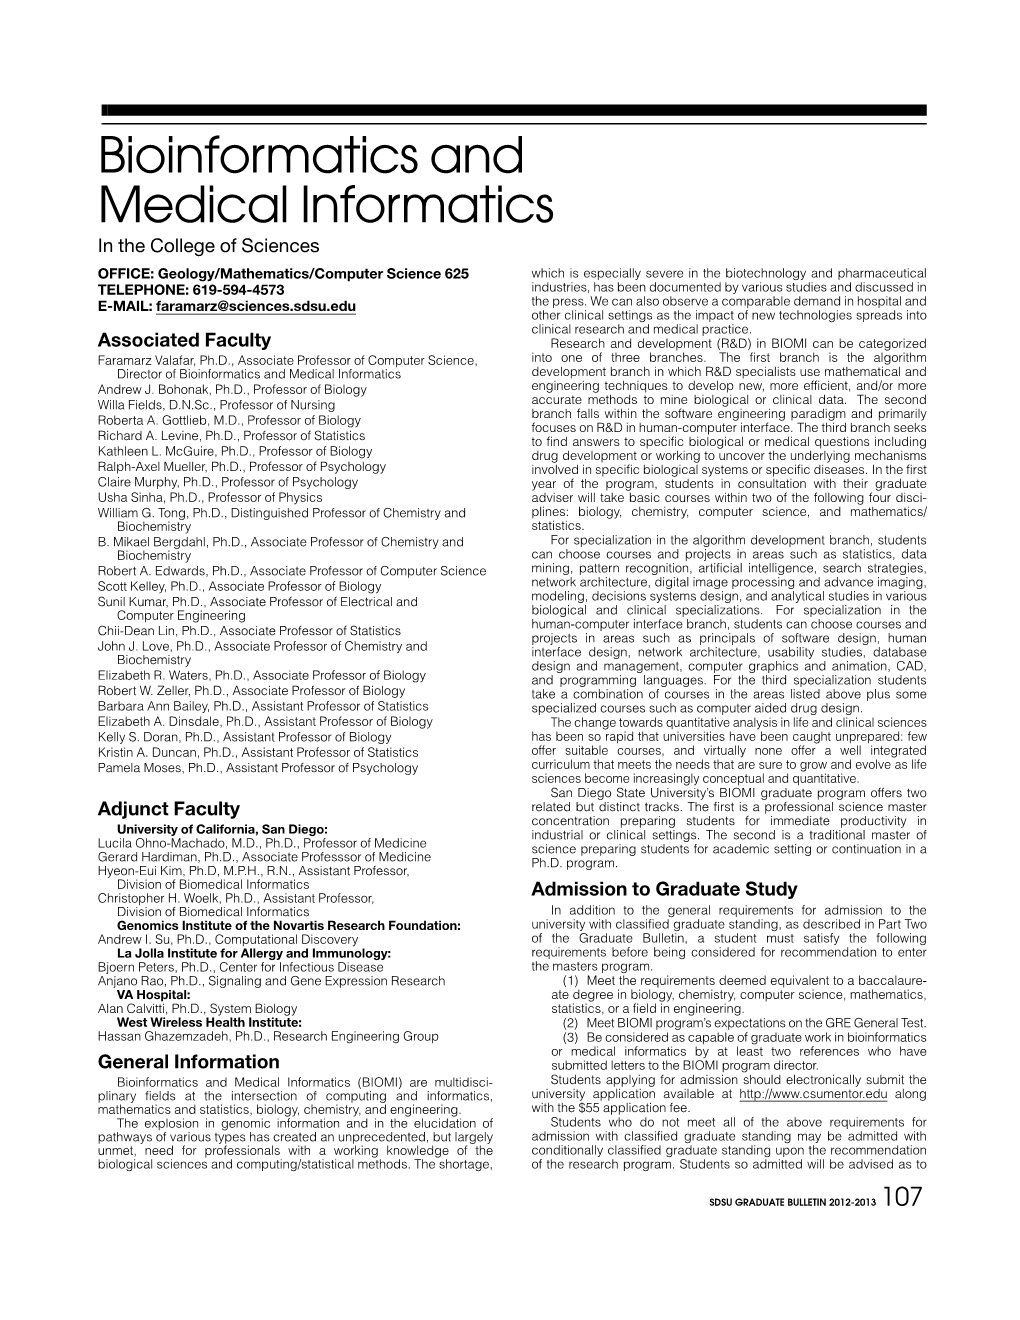 Bioinformatics and Medical Informatics.Pdf